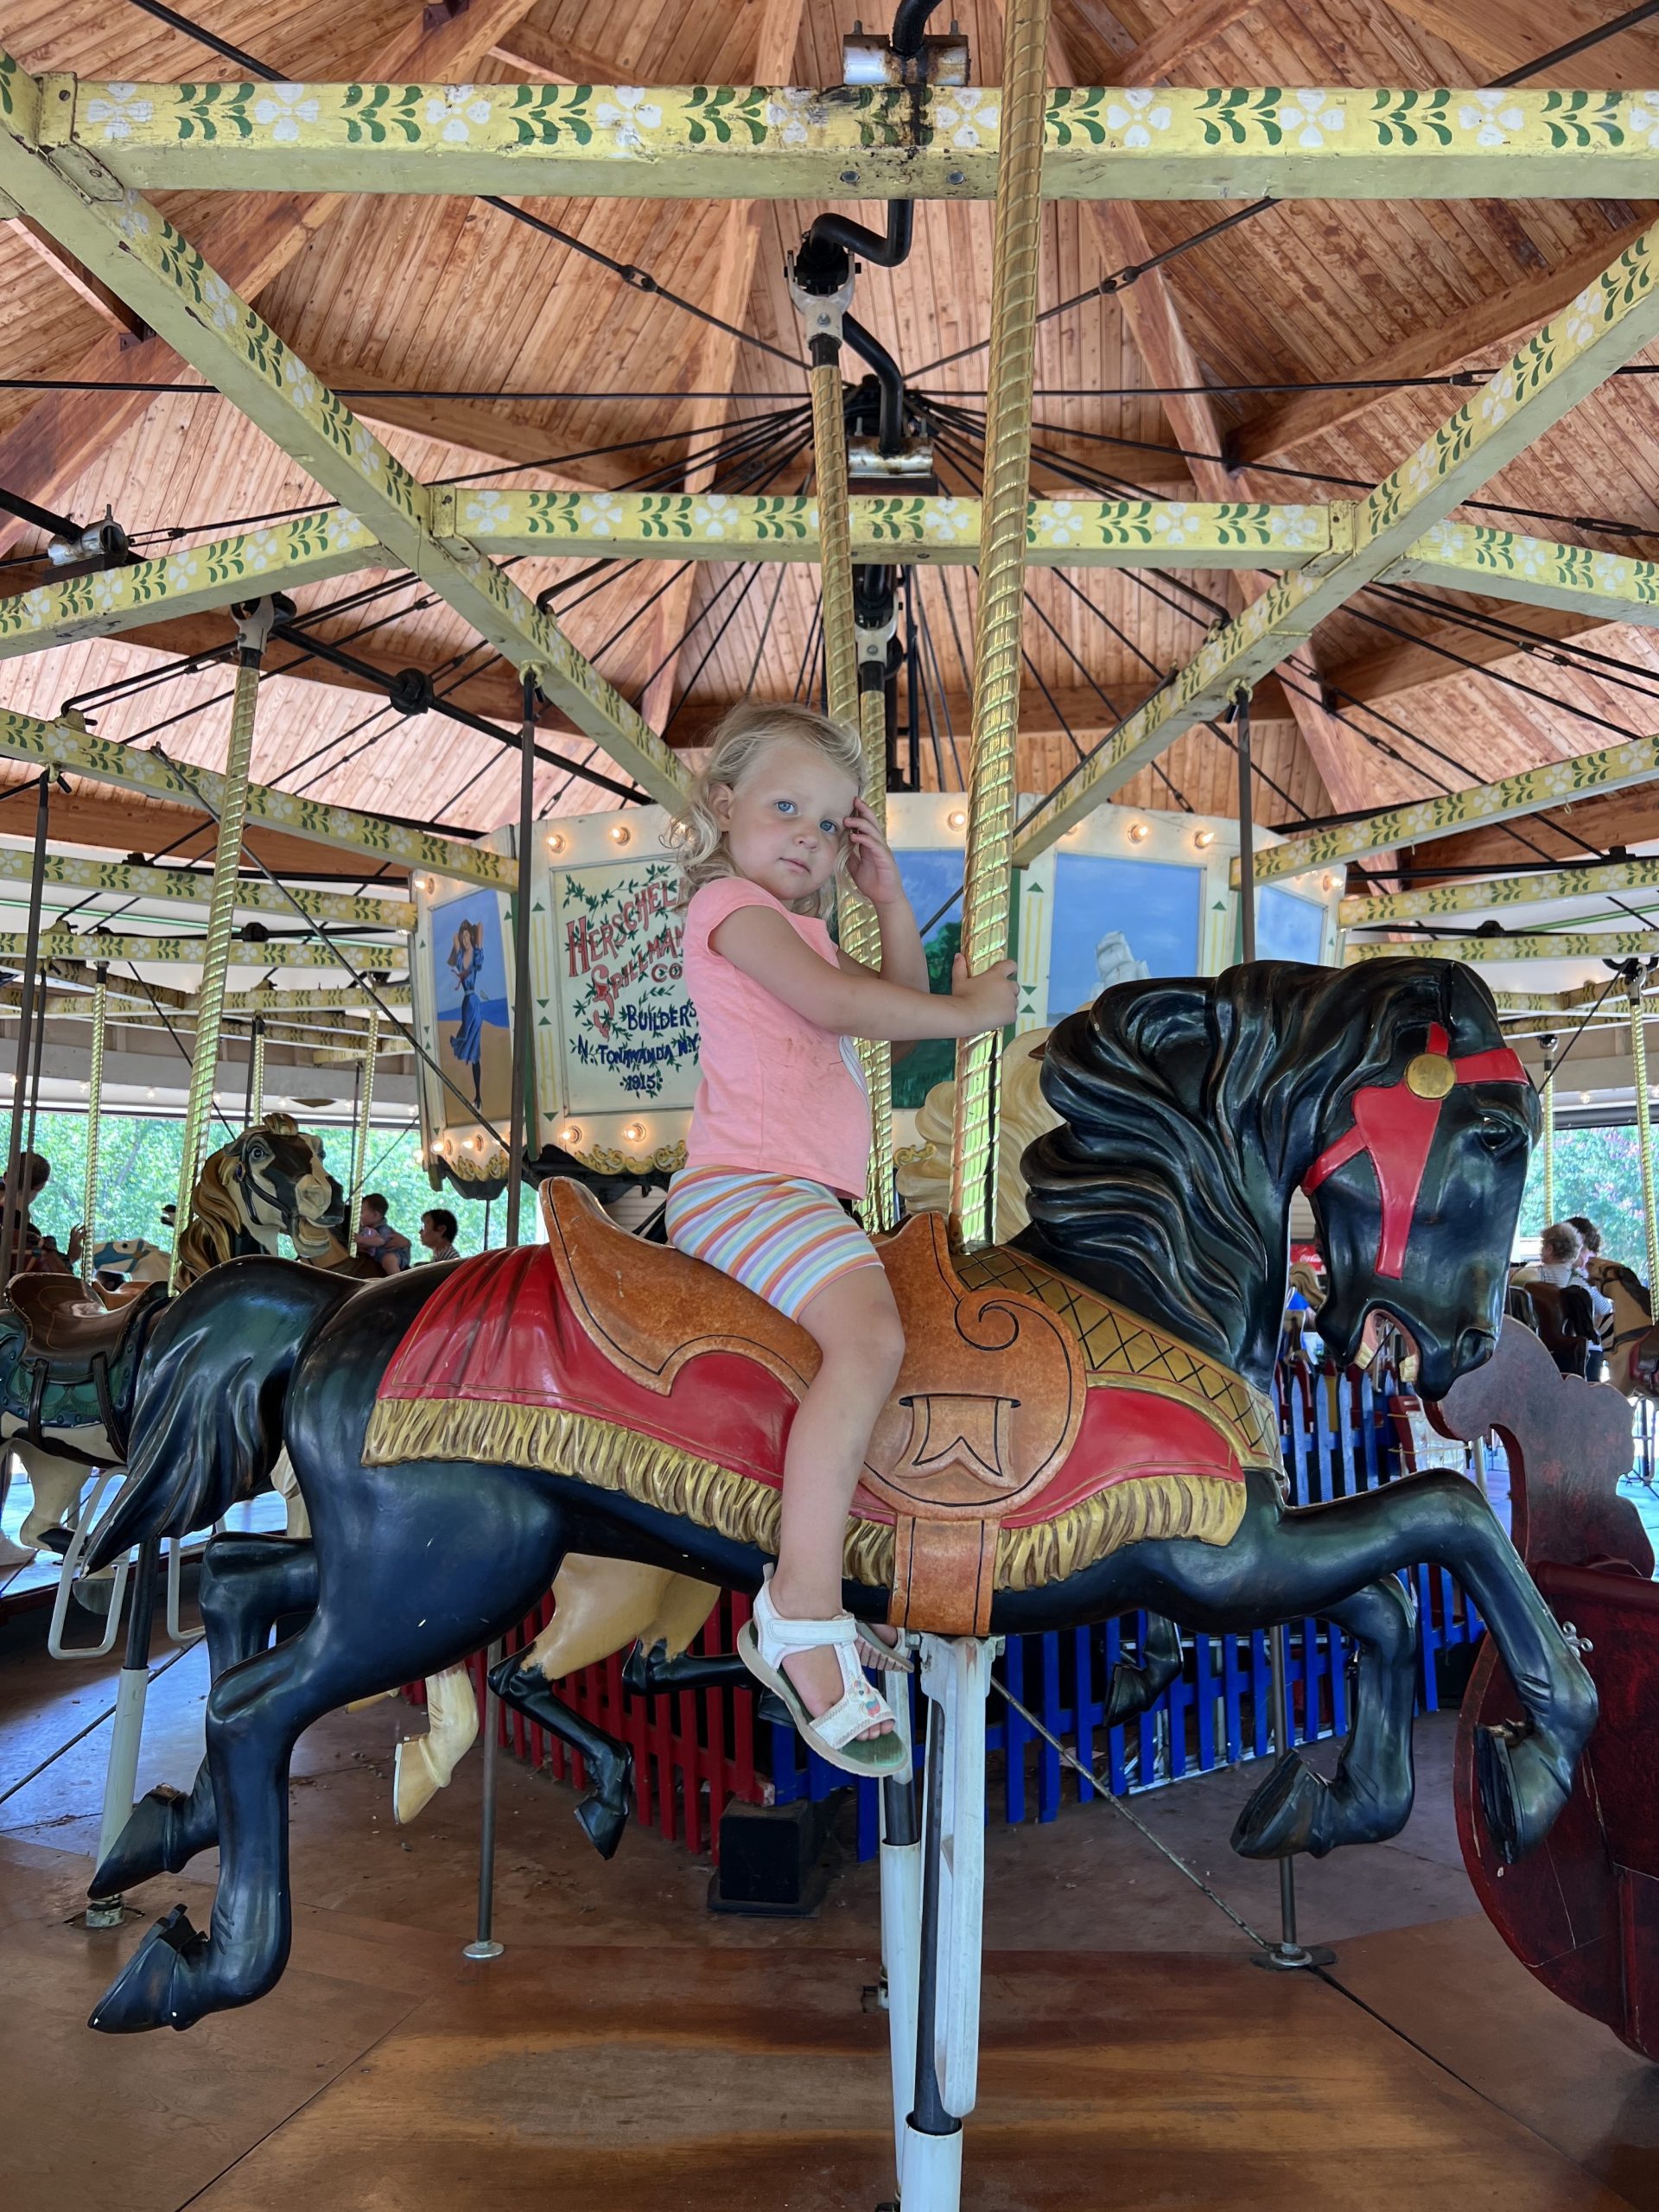 Wheaton Regional Park Carousel